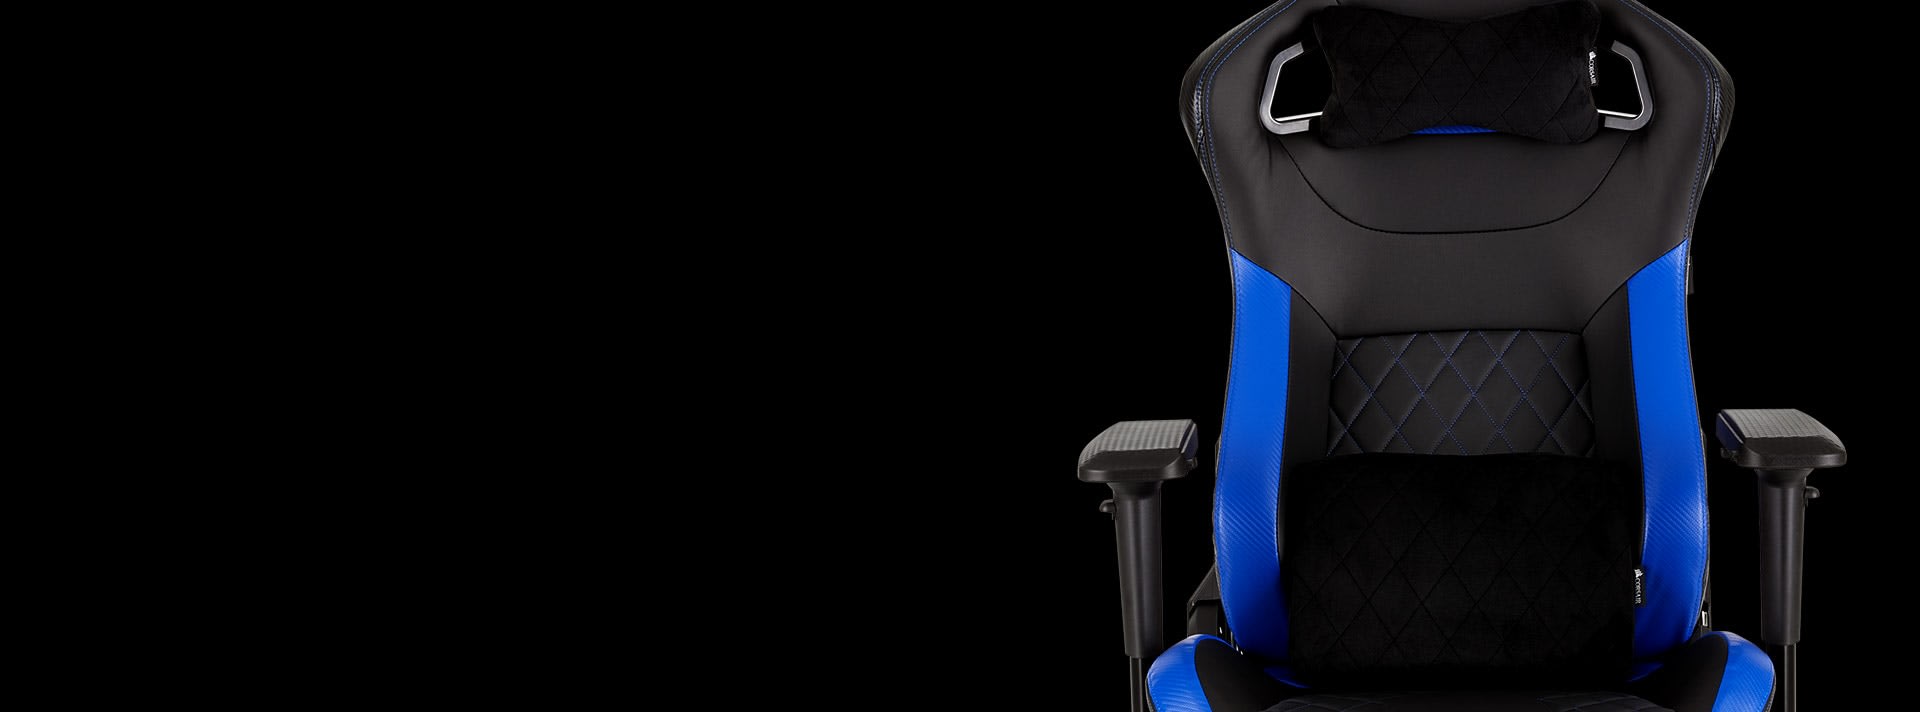 T1 RACE 2018 Gaming Chair — Black/Blue